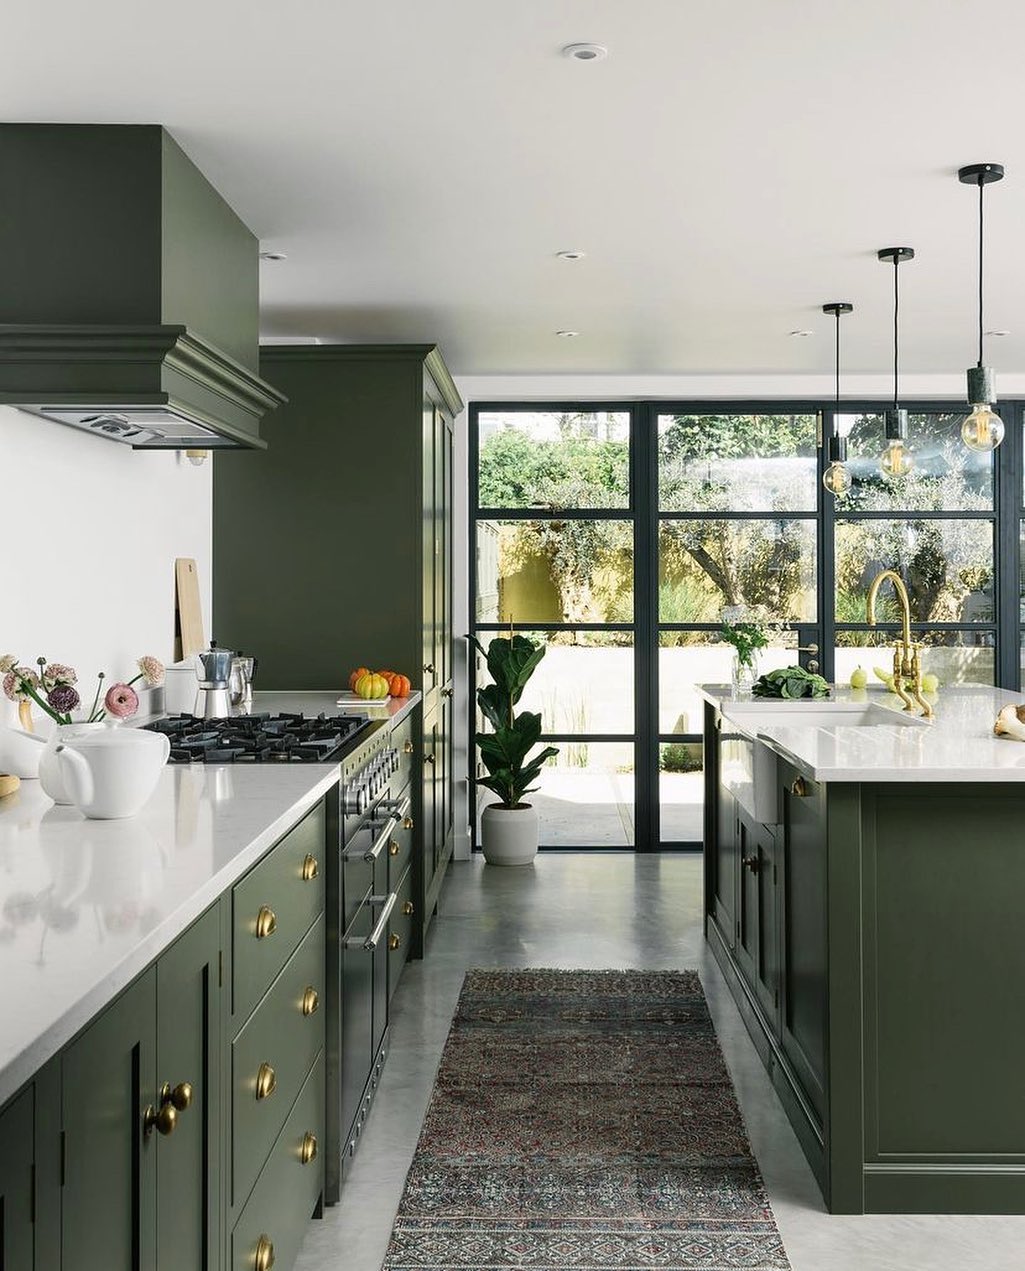 Gorgeous in green @devolkitchens!

#kitchen #kitchendesign #kitchenremodel #Kitchen remodeling #housebeautiful #designchic #kitchendecor #kitchenorganization